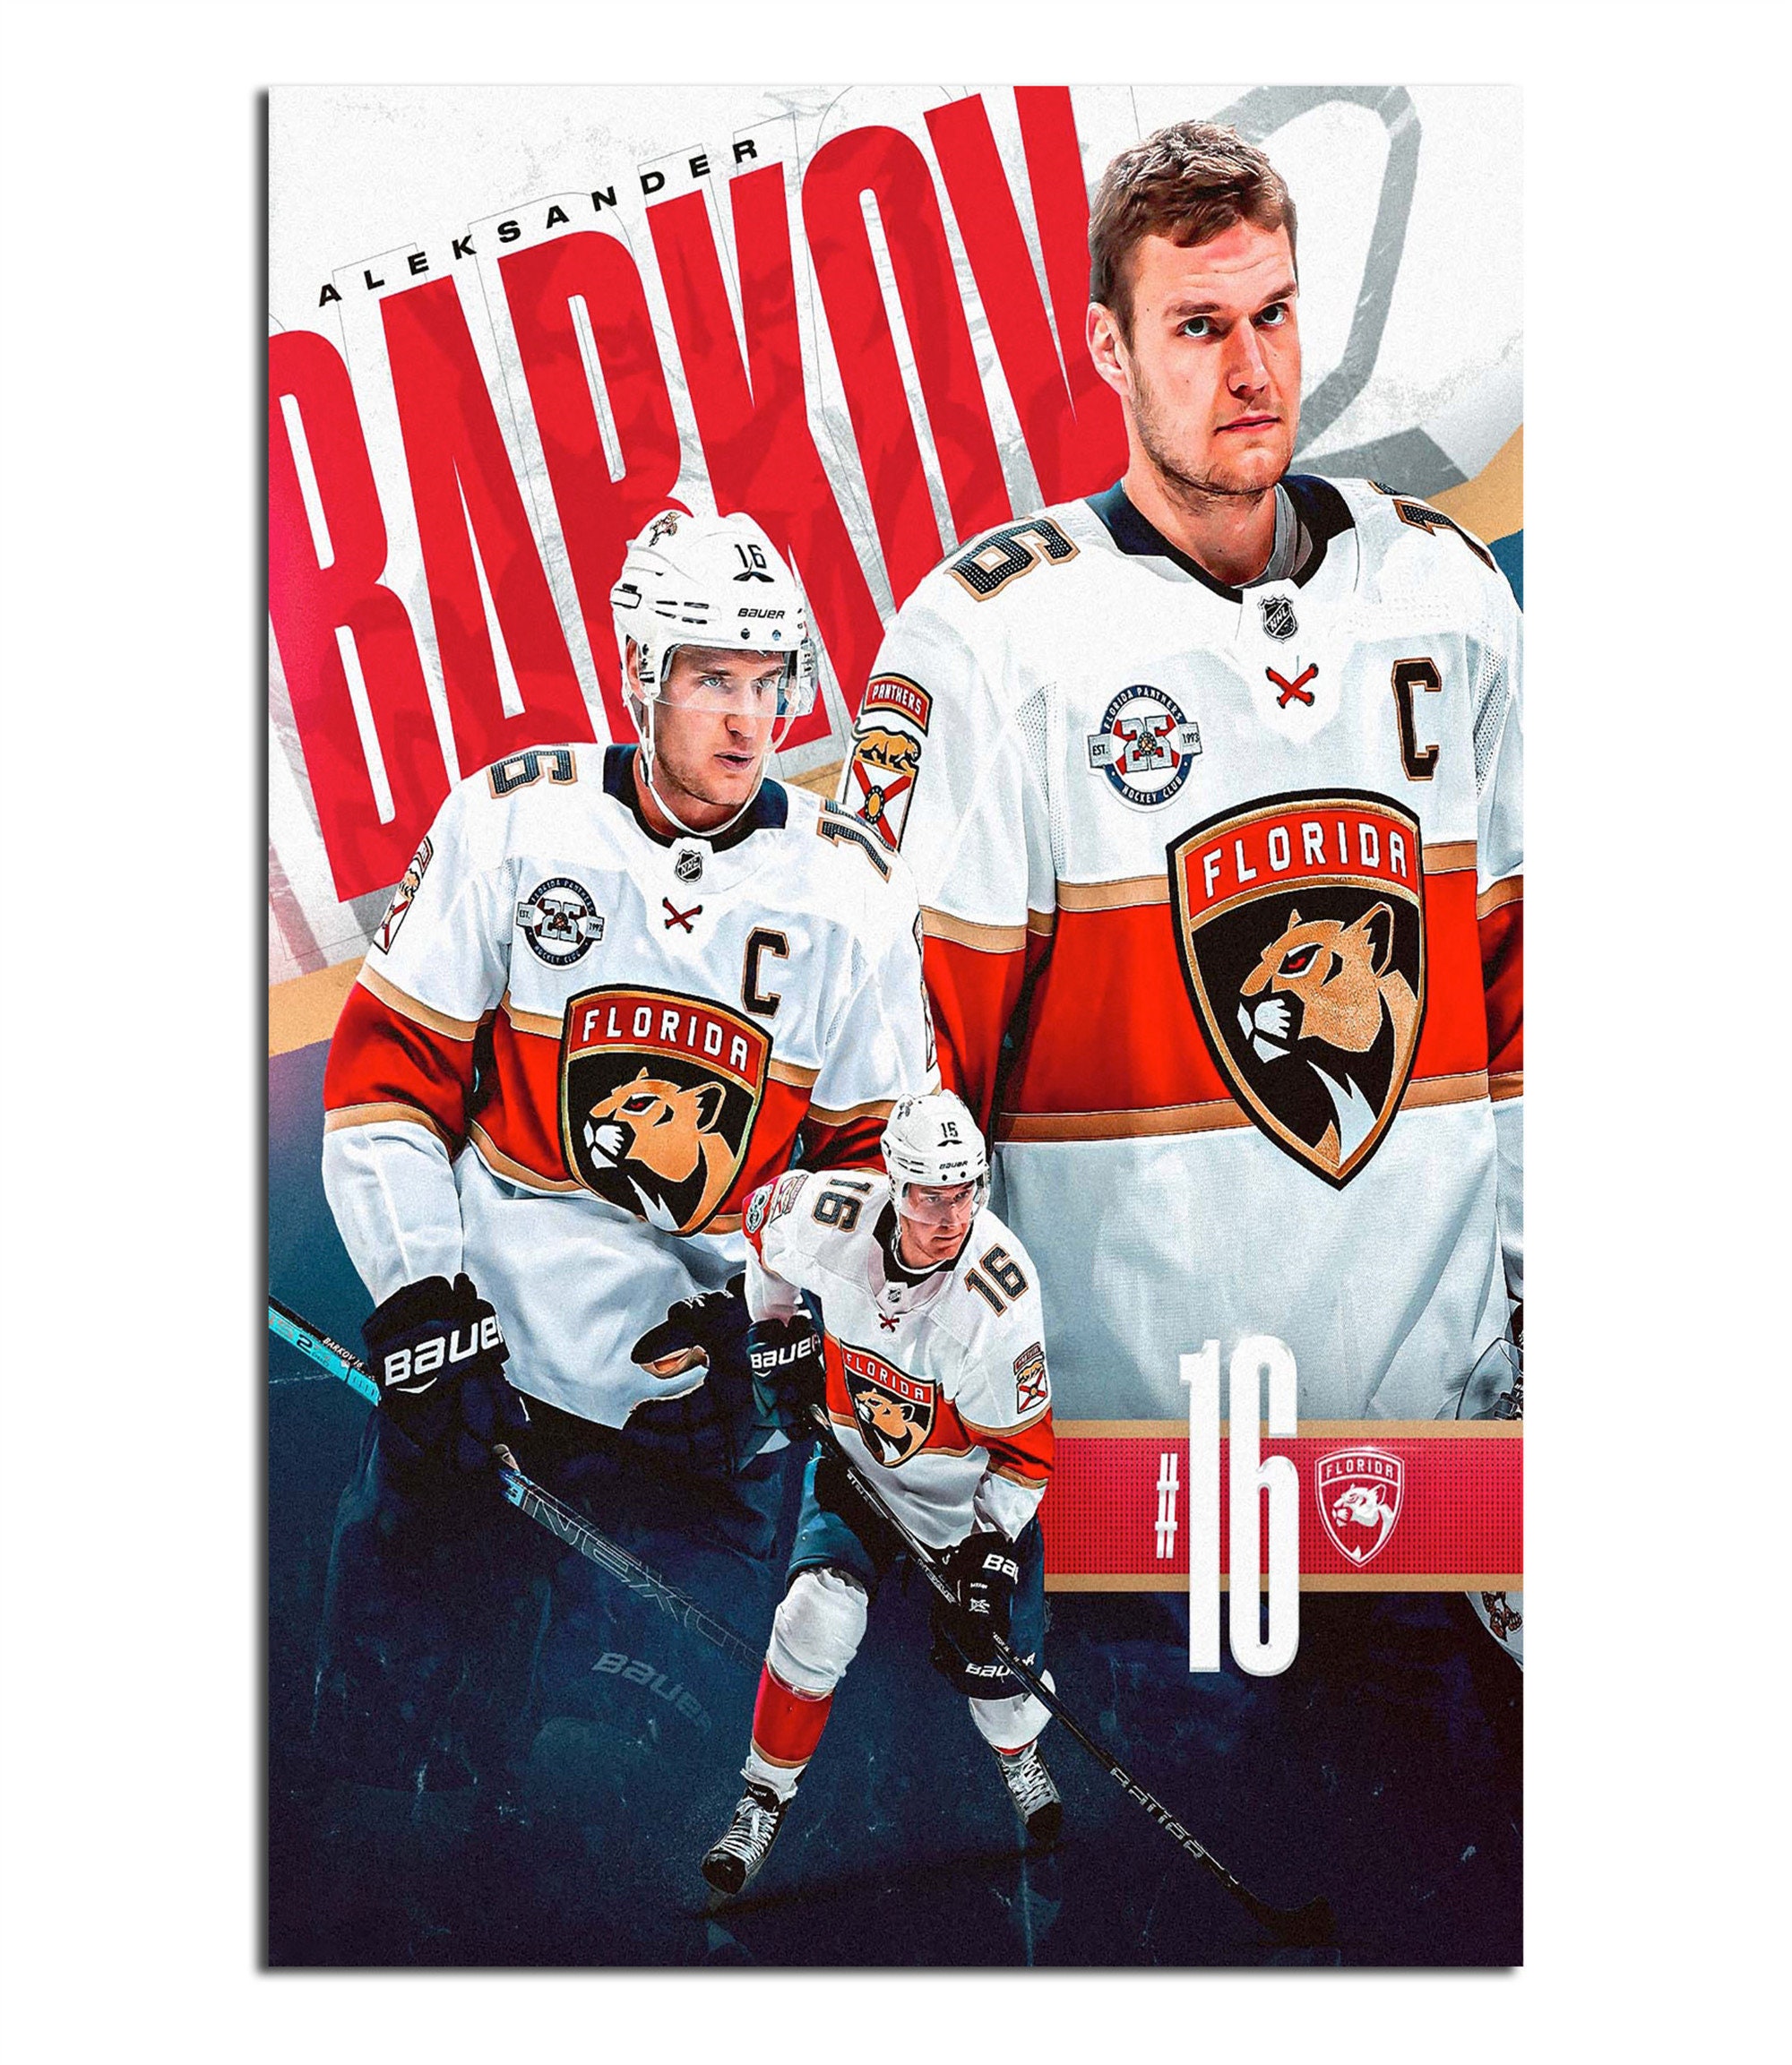 Florida Panthers: Aleksander Barkov 2021 Poster - Officially